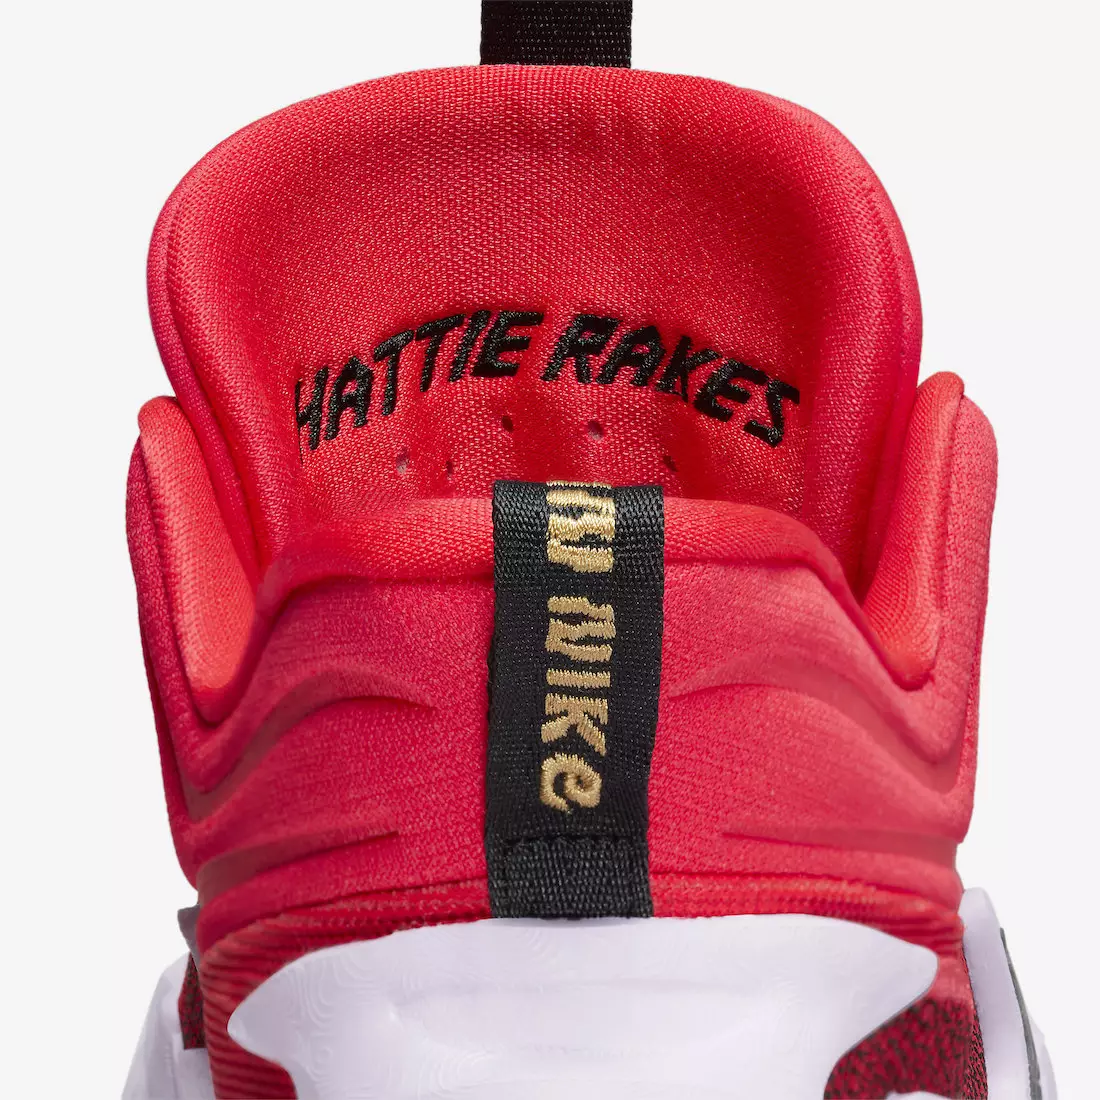 Nike Cosmic Unity 2 Hattie Rakes Vermell Sirena DH1537-601 Data de llançament